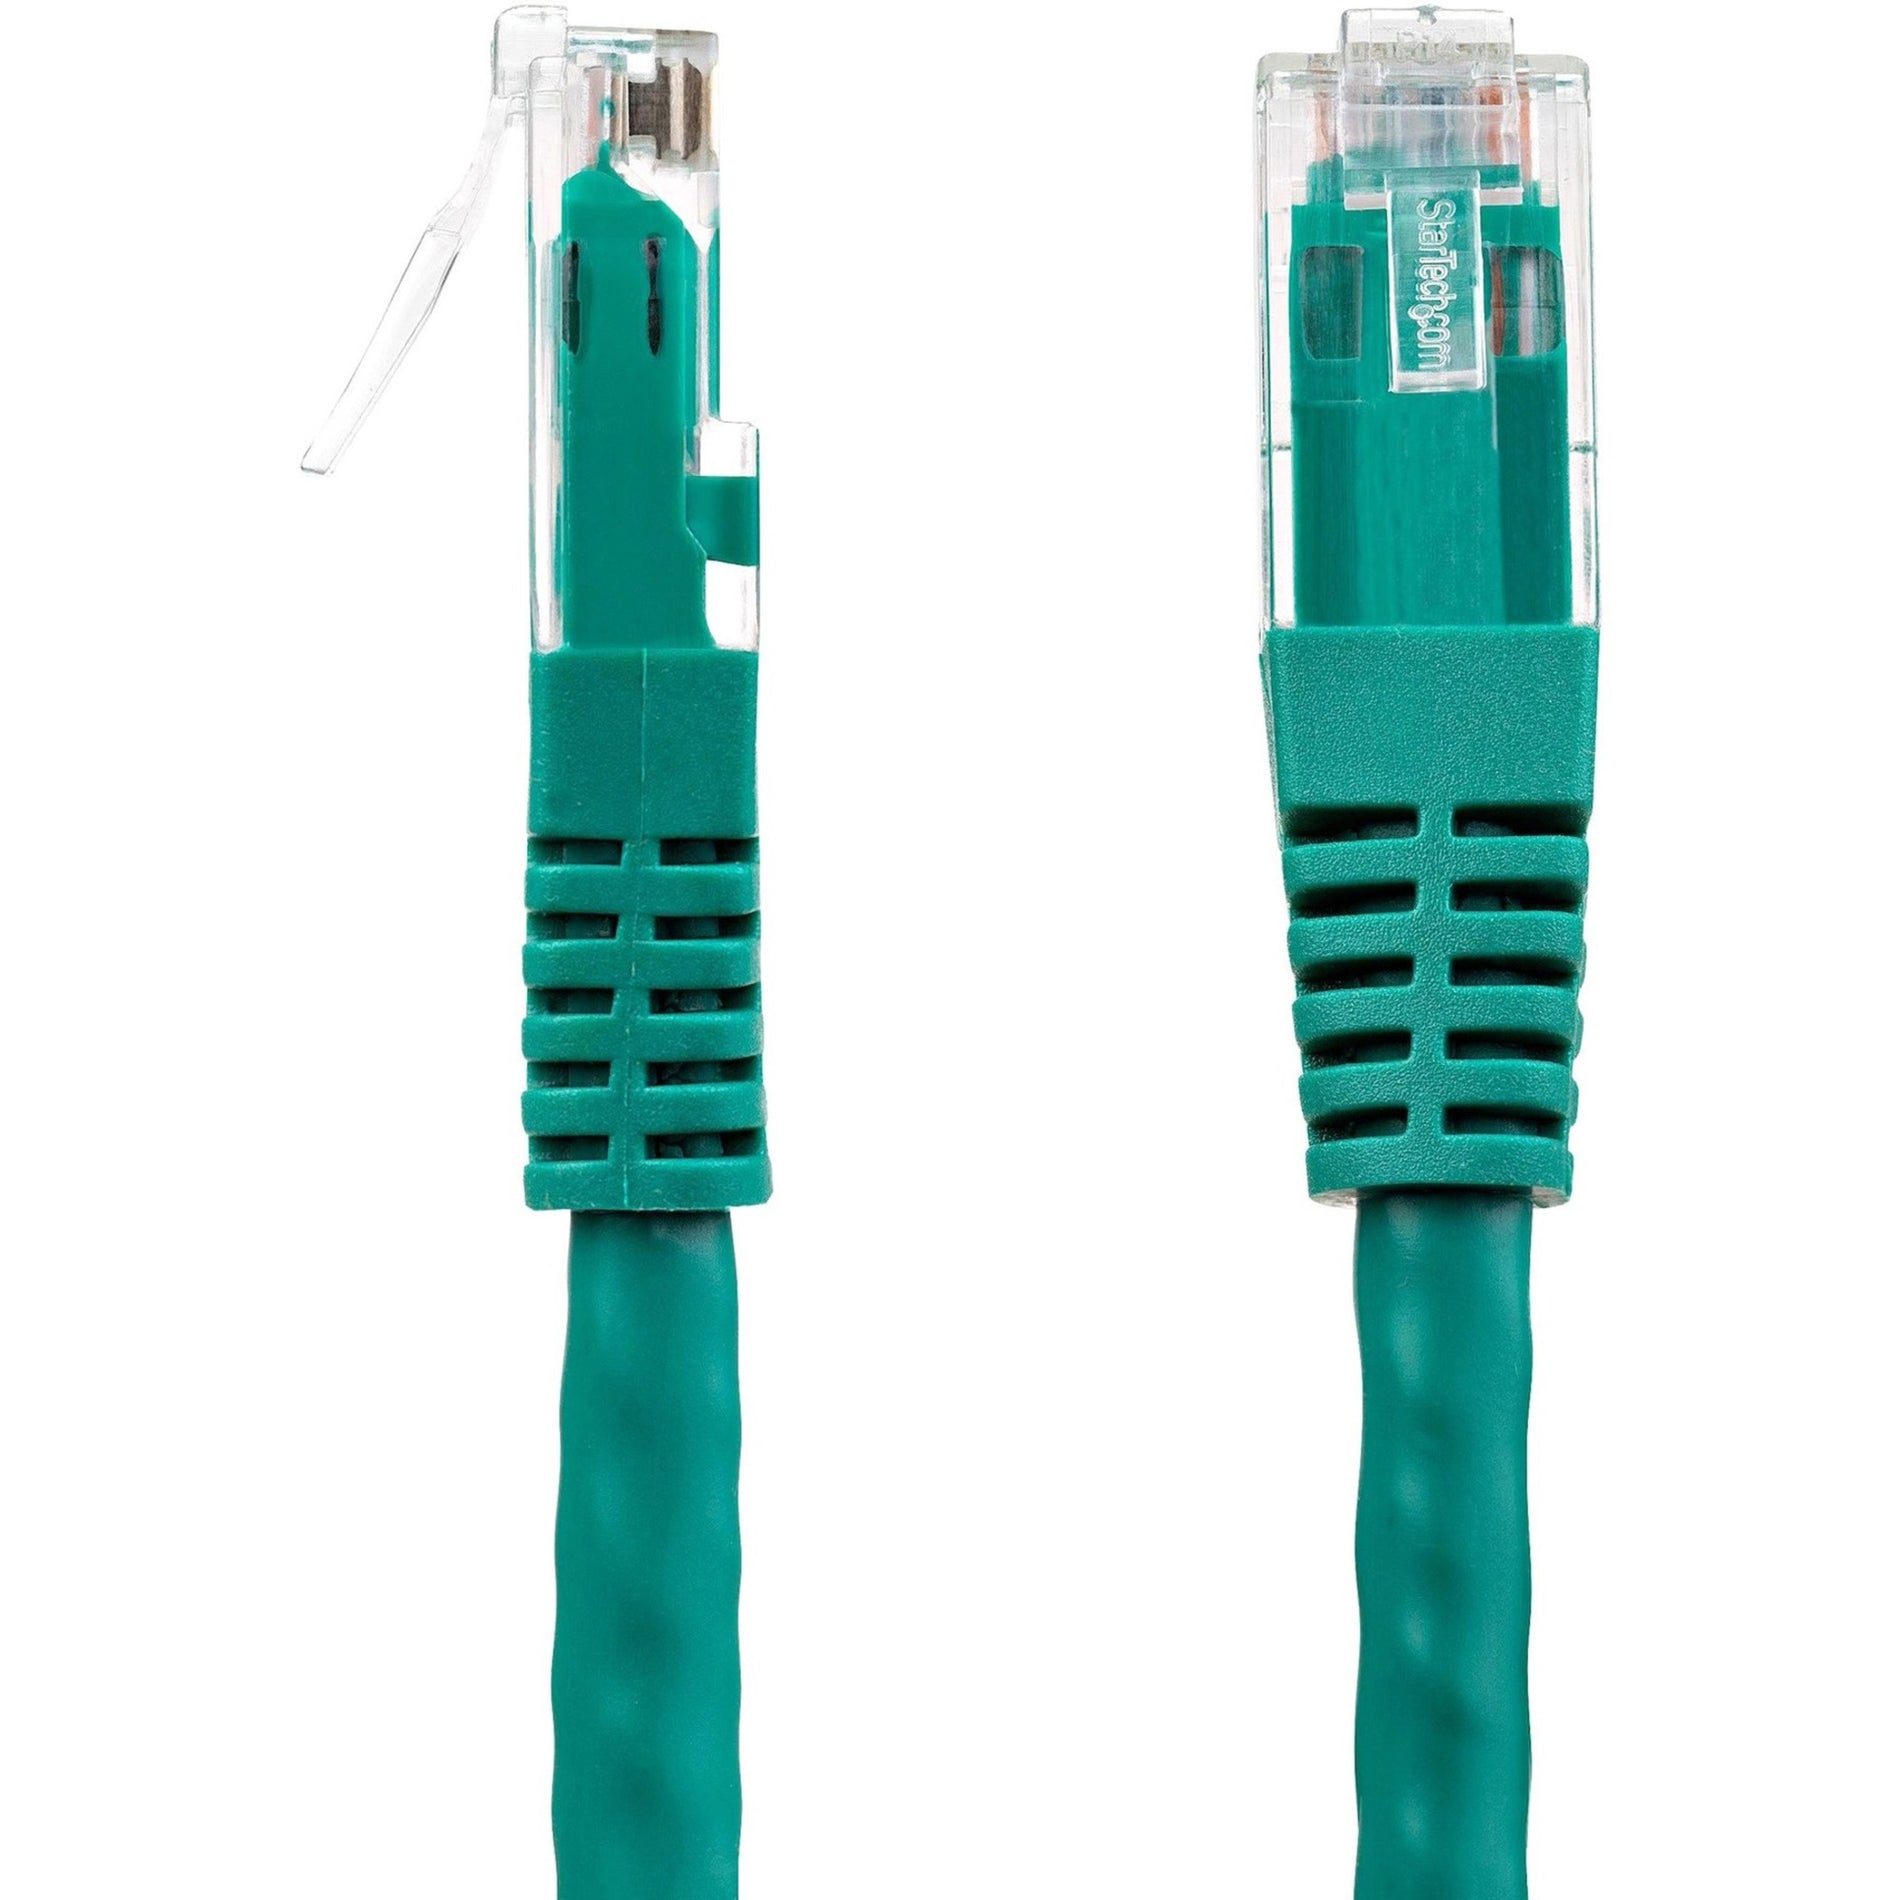 StarTech.com C6PATCH1GN 1ft Green Molded Cat6 UTP Patch Cable ETL Verified, Lifetime Warranty, 10 Gbit/s Data Transfer Rate